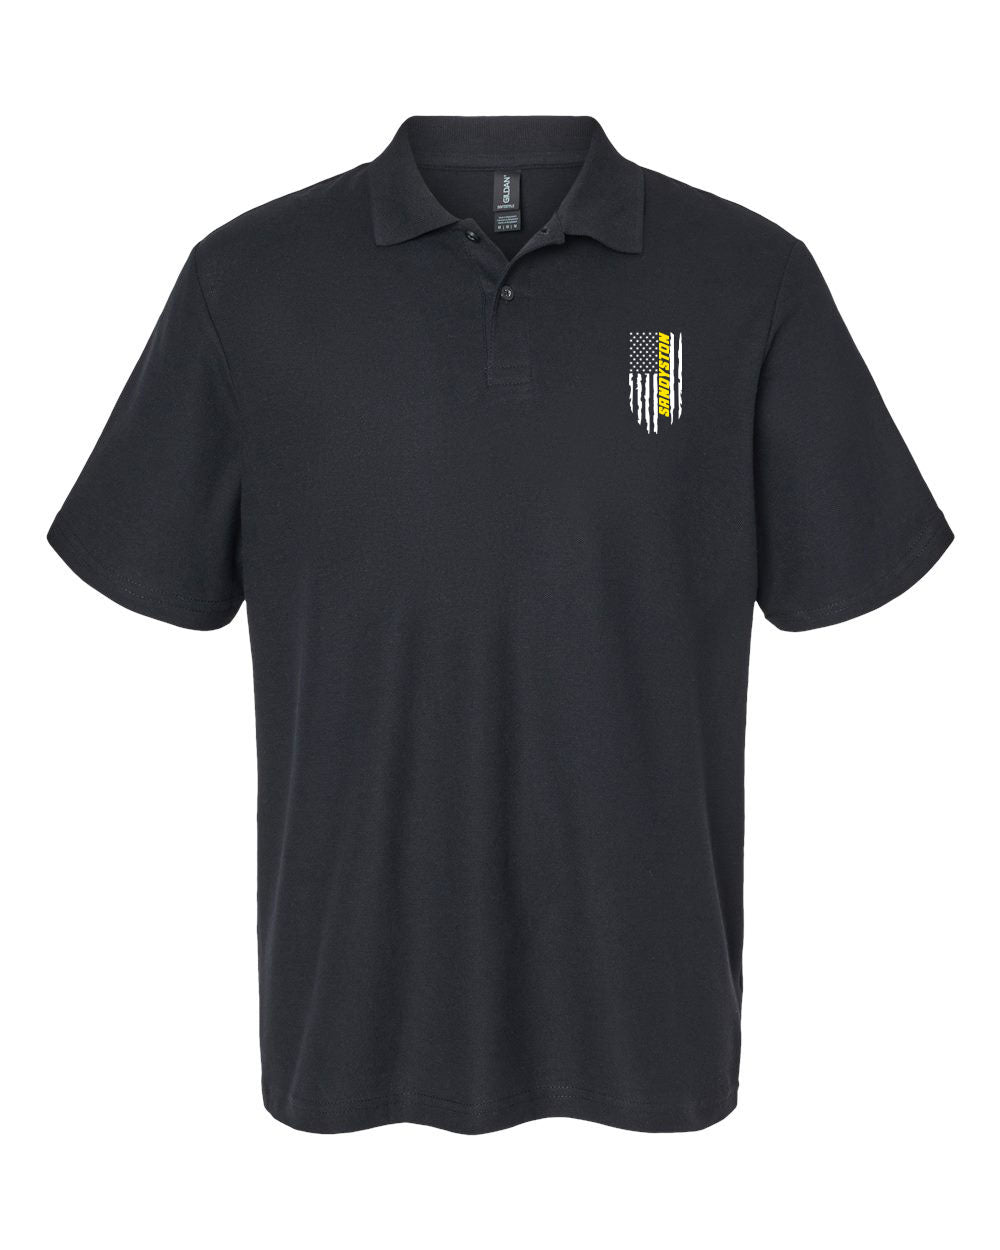 Sandyston Walpack Design 17 Polo T-Shirt